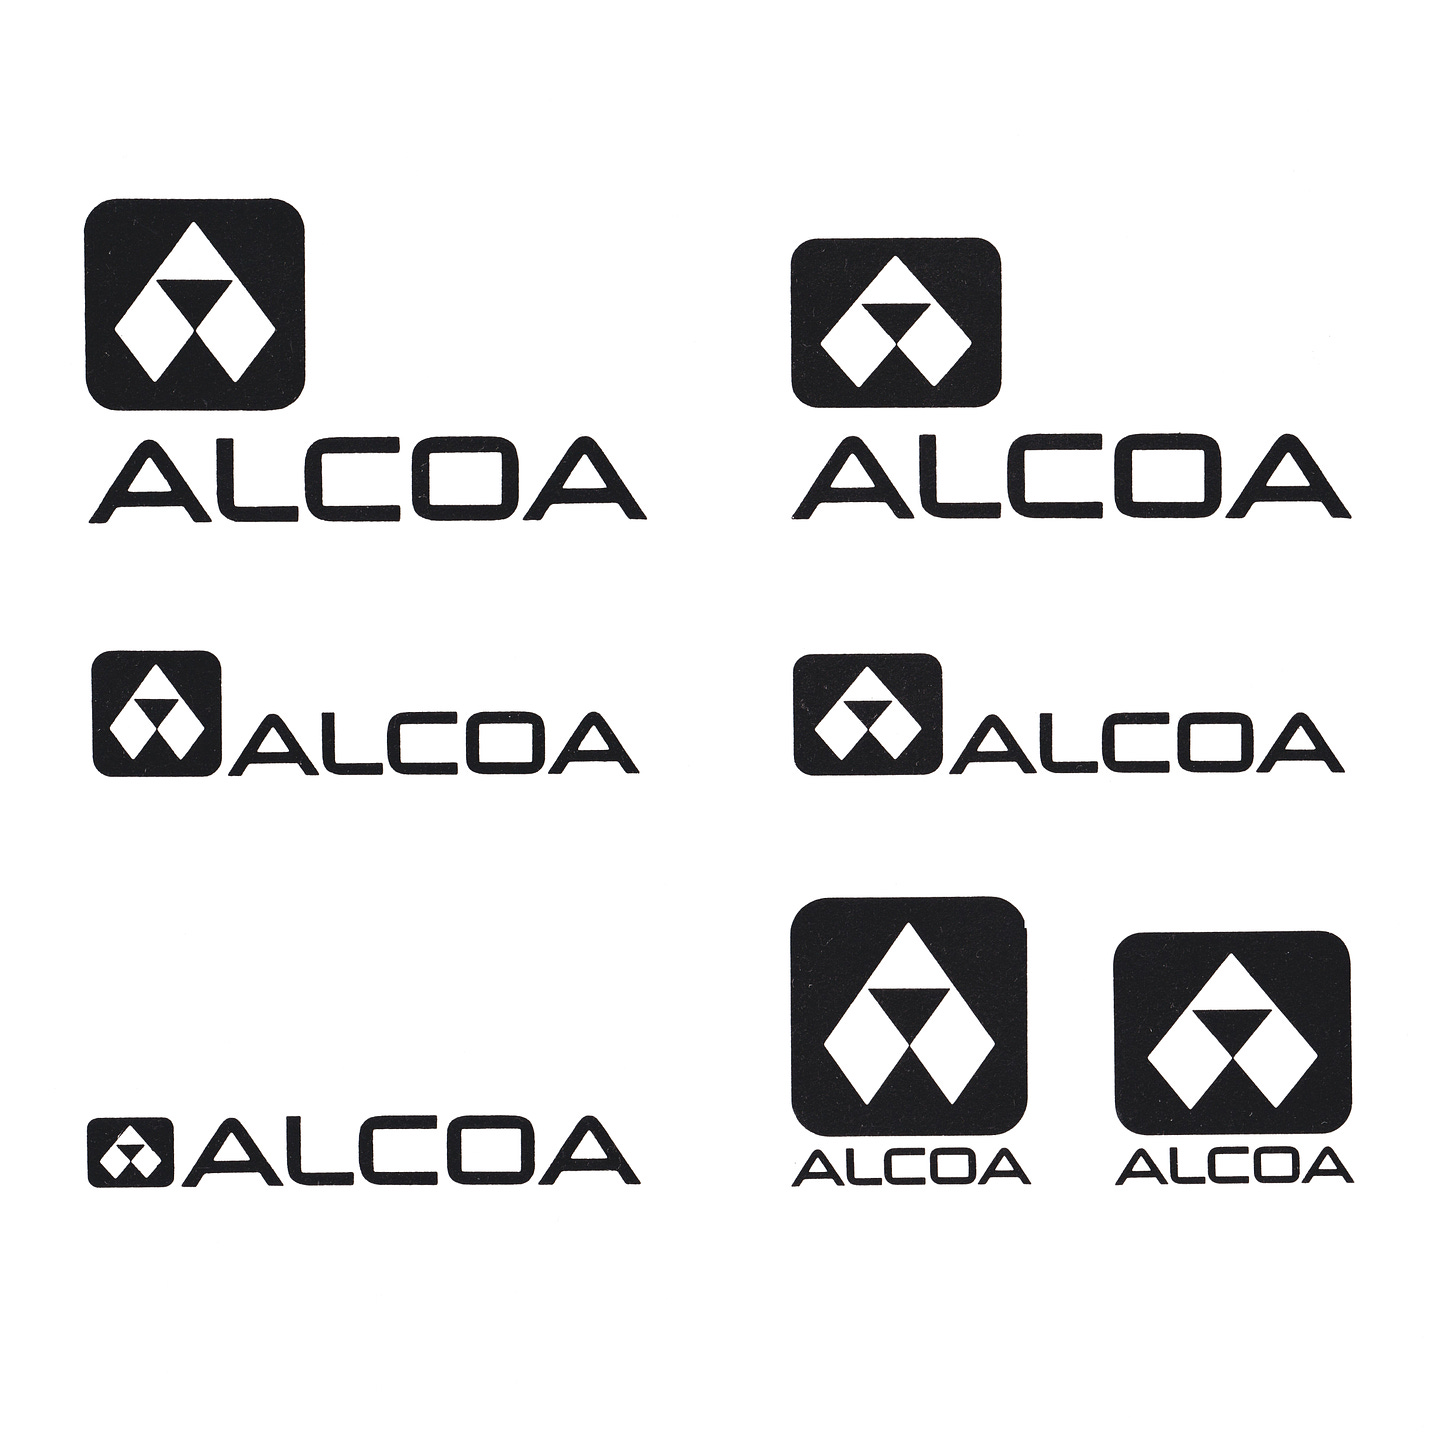 ALCOA logo lock-ups by Saul Bass 